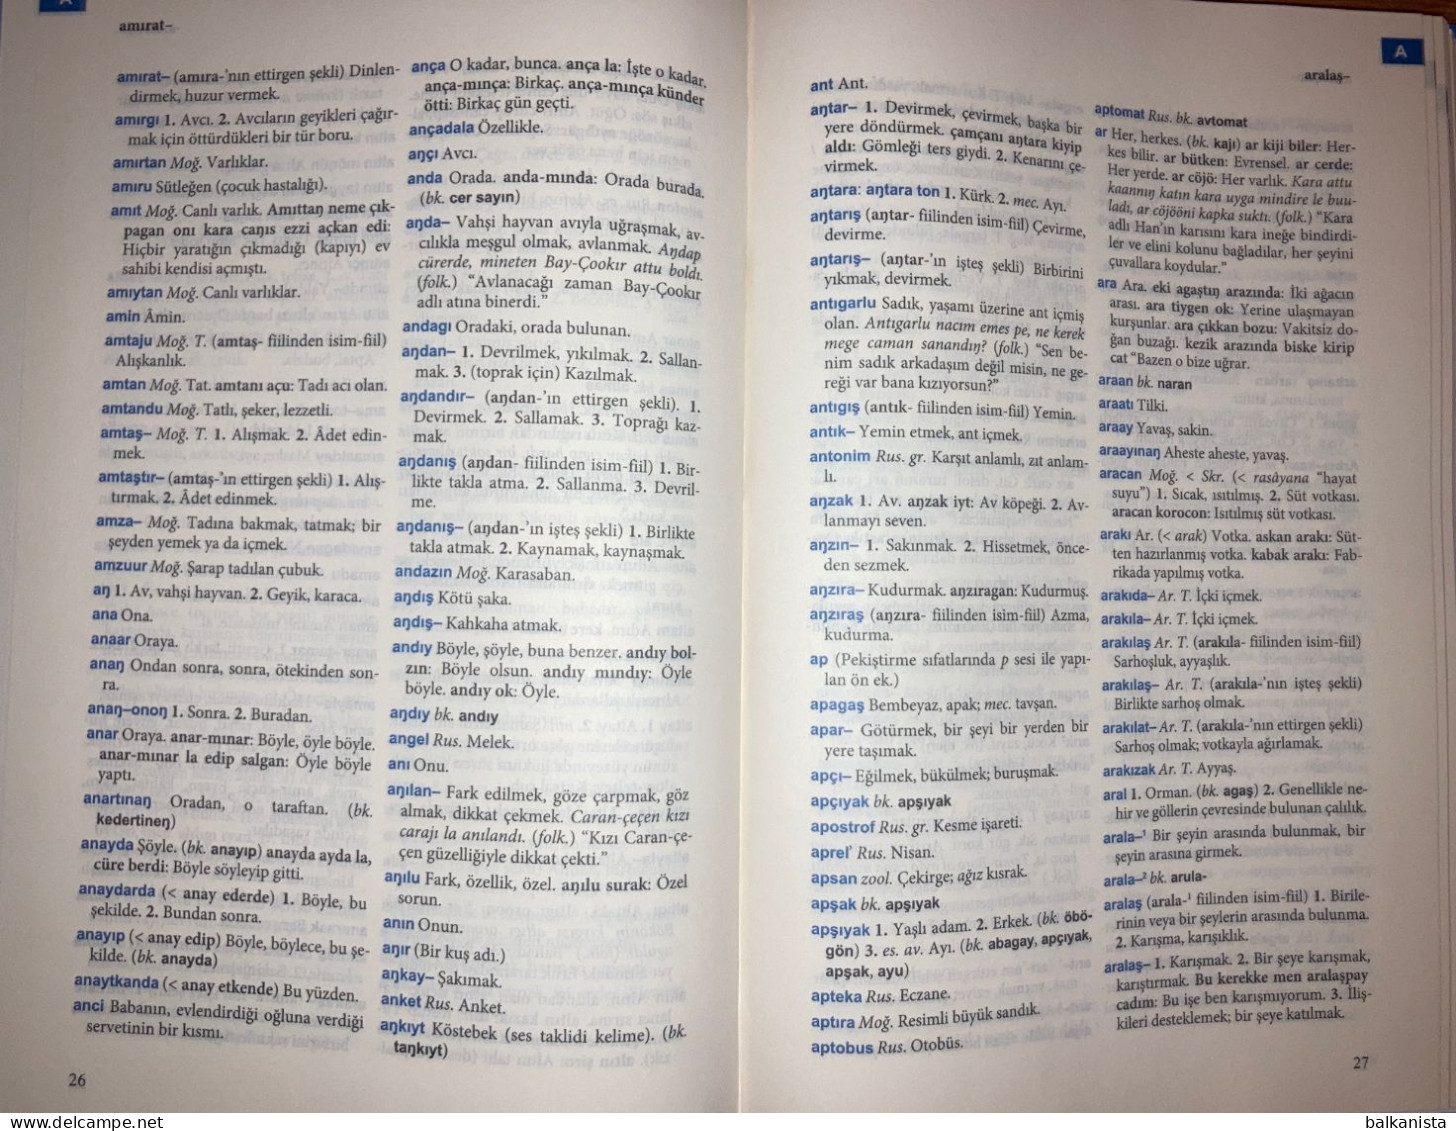 Altayca - Turkce Sozluk - Turkish - Altai Languages Dictionary Turkic - Cultura